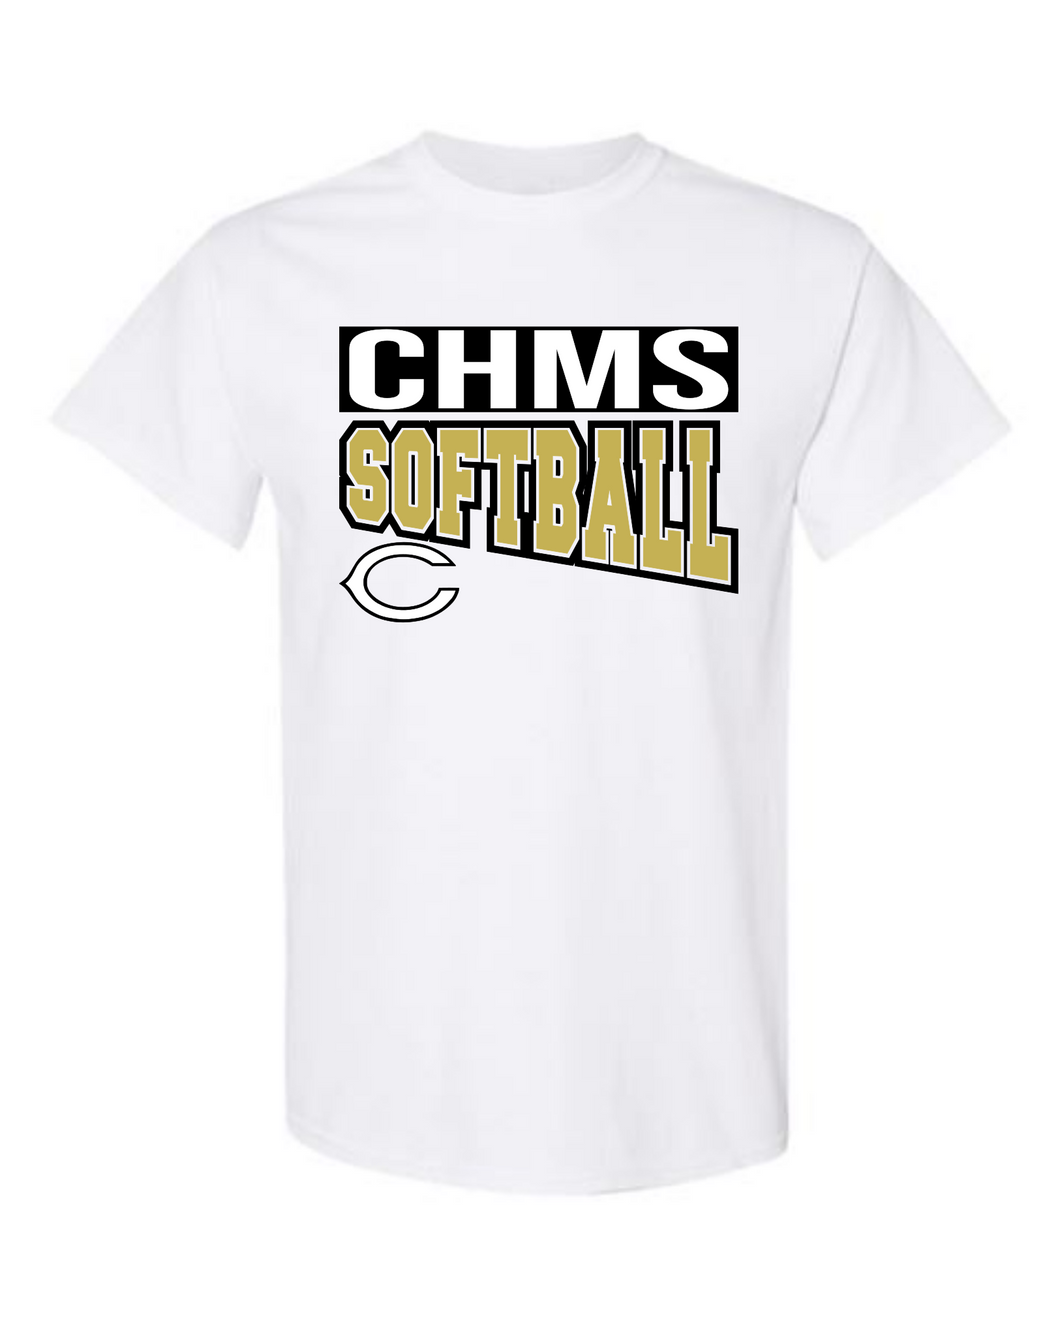 CHMS Softball T-shirt